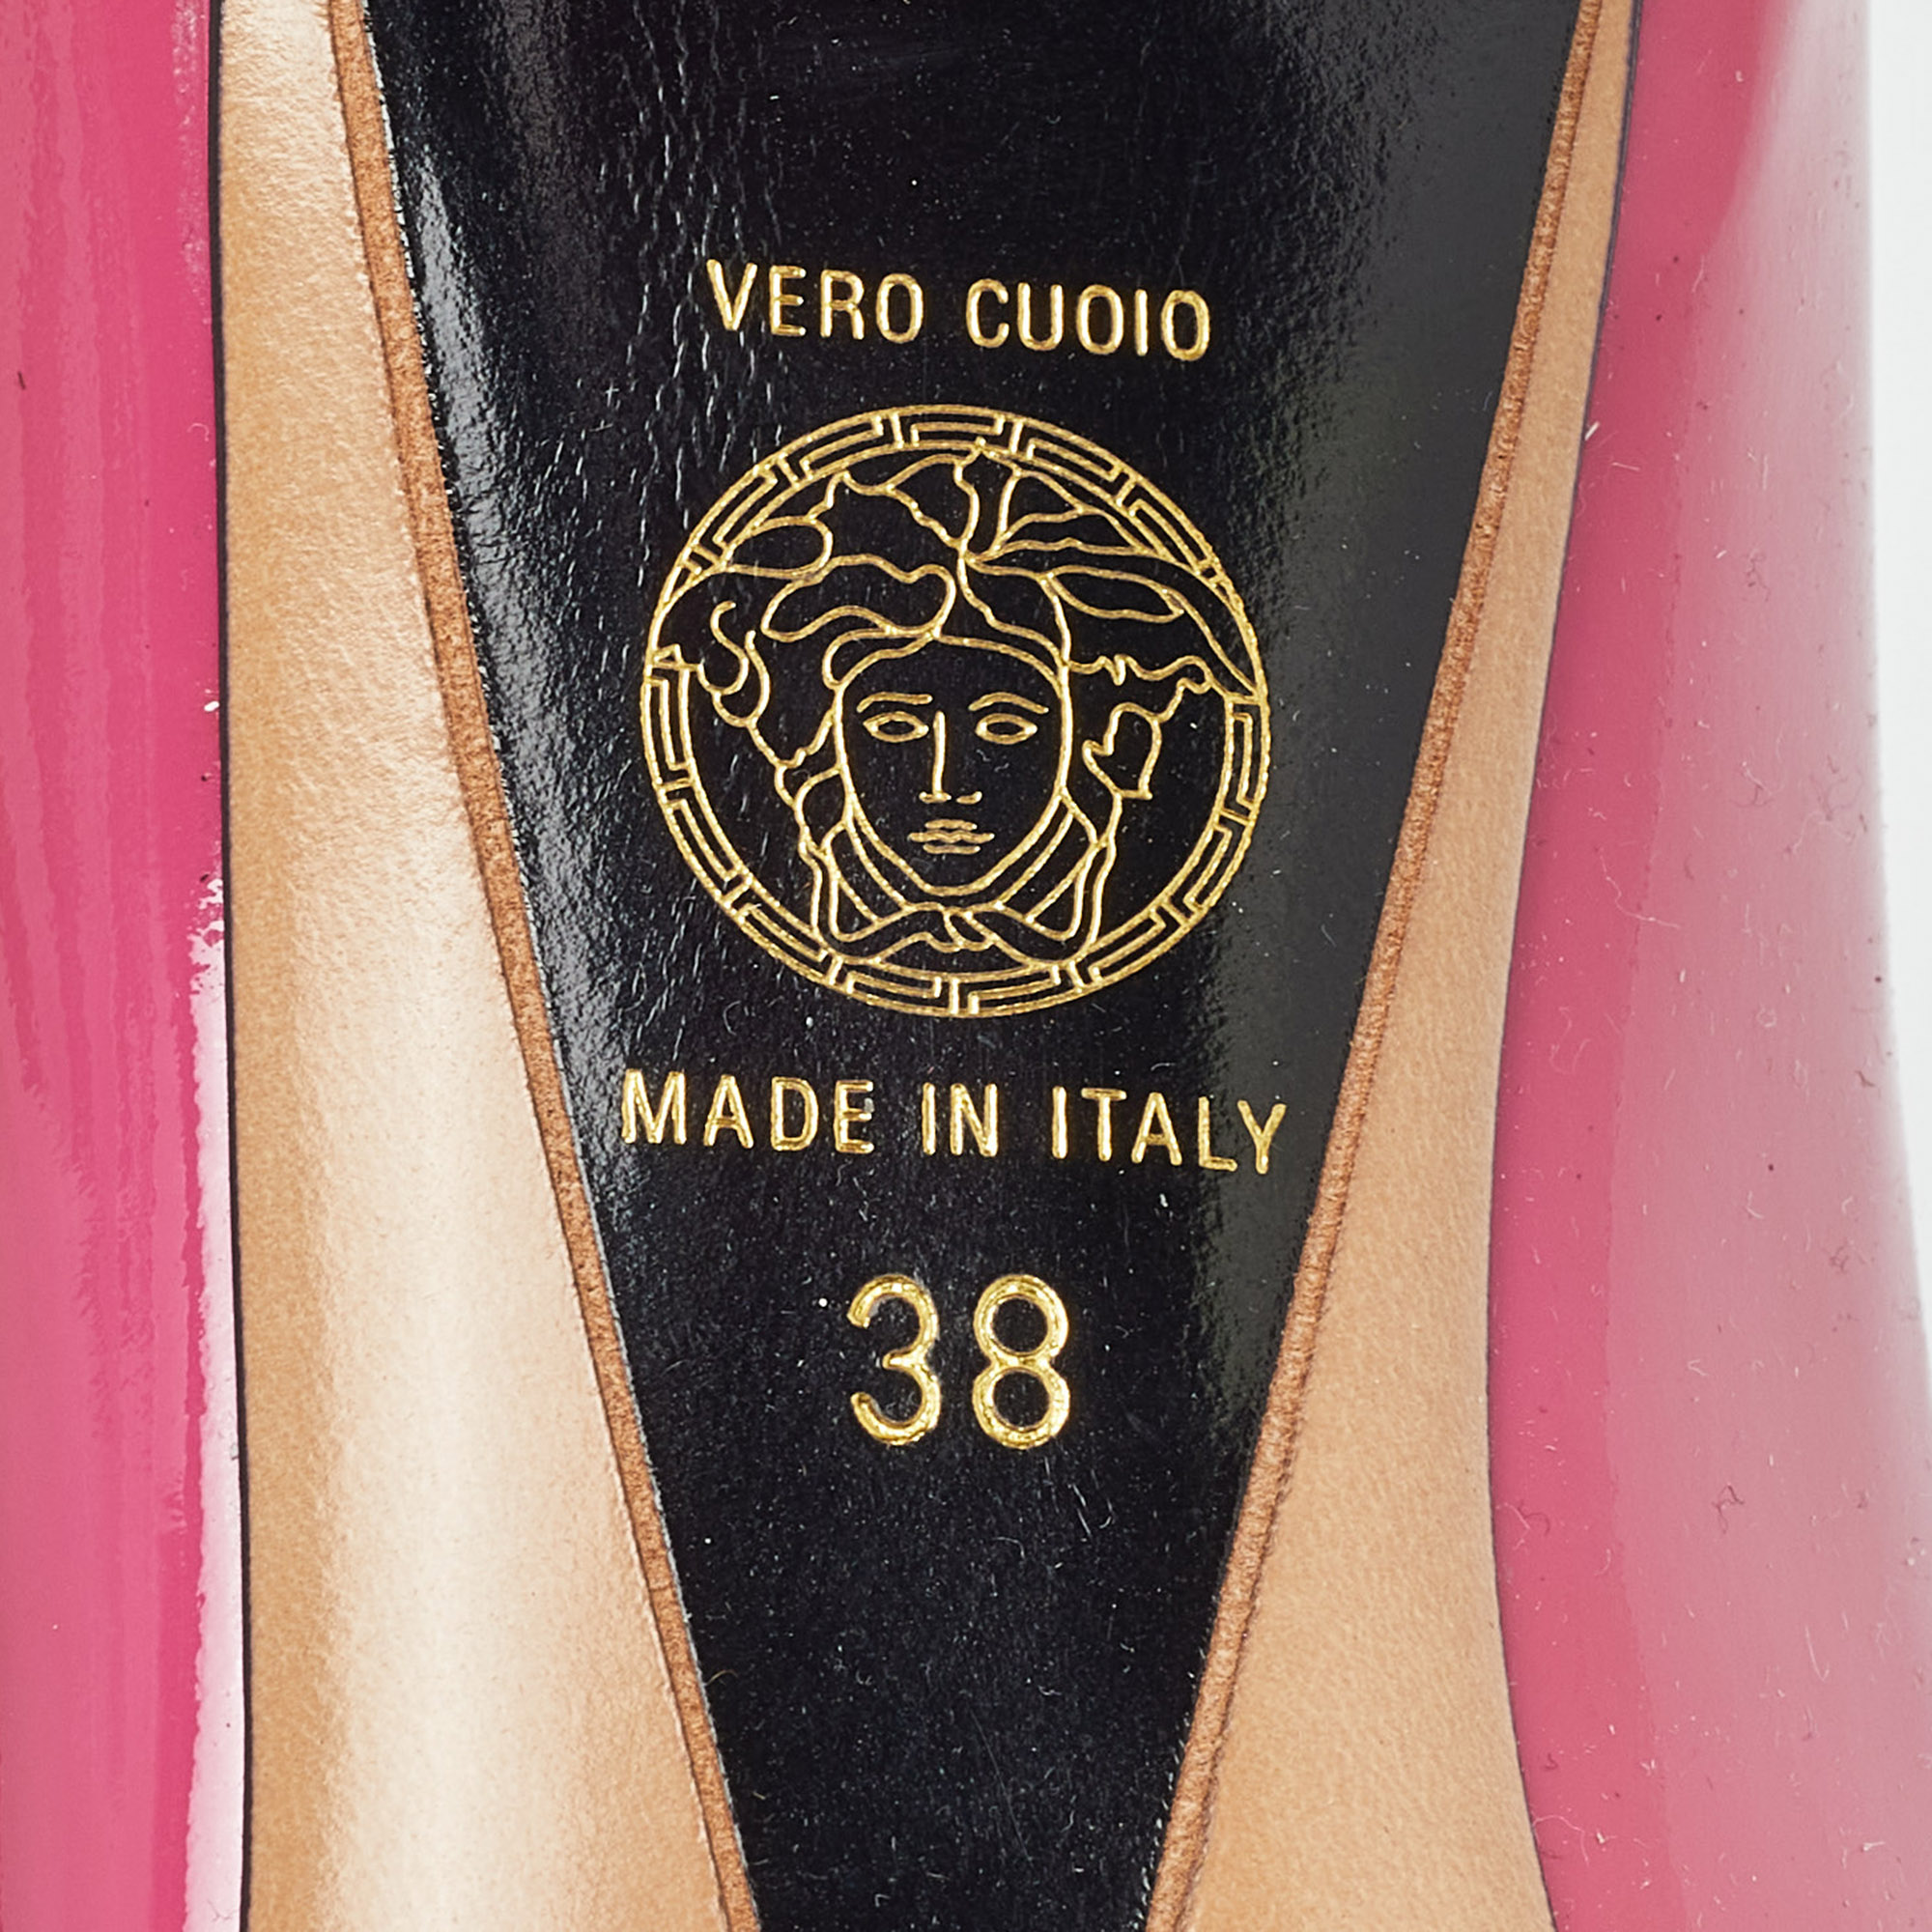 Versace Pink Patent Leather Medusa Pumps Size 38